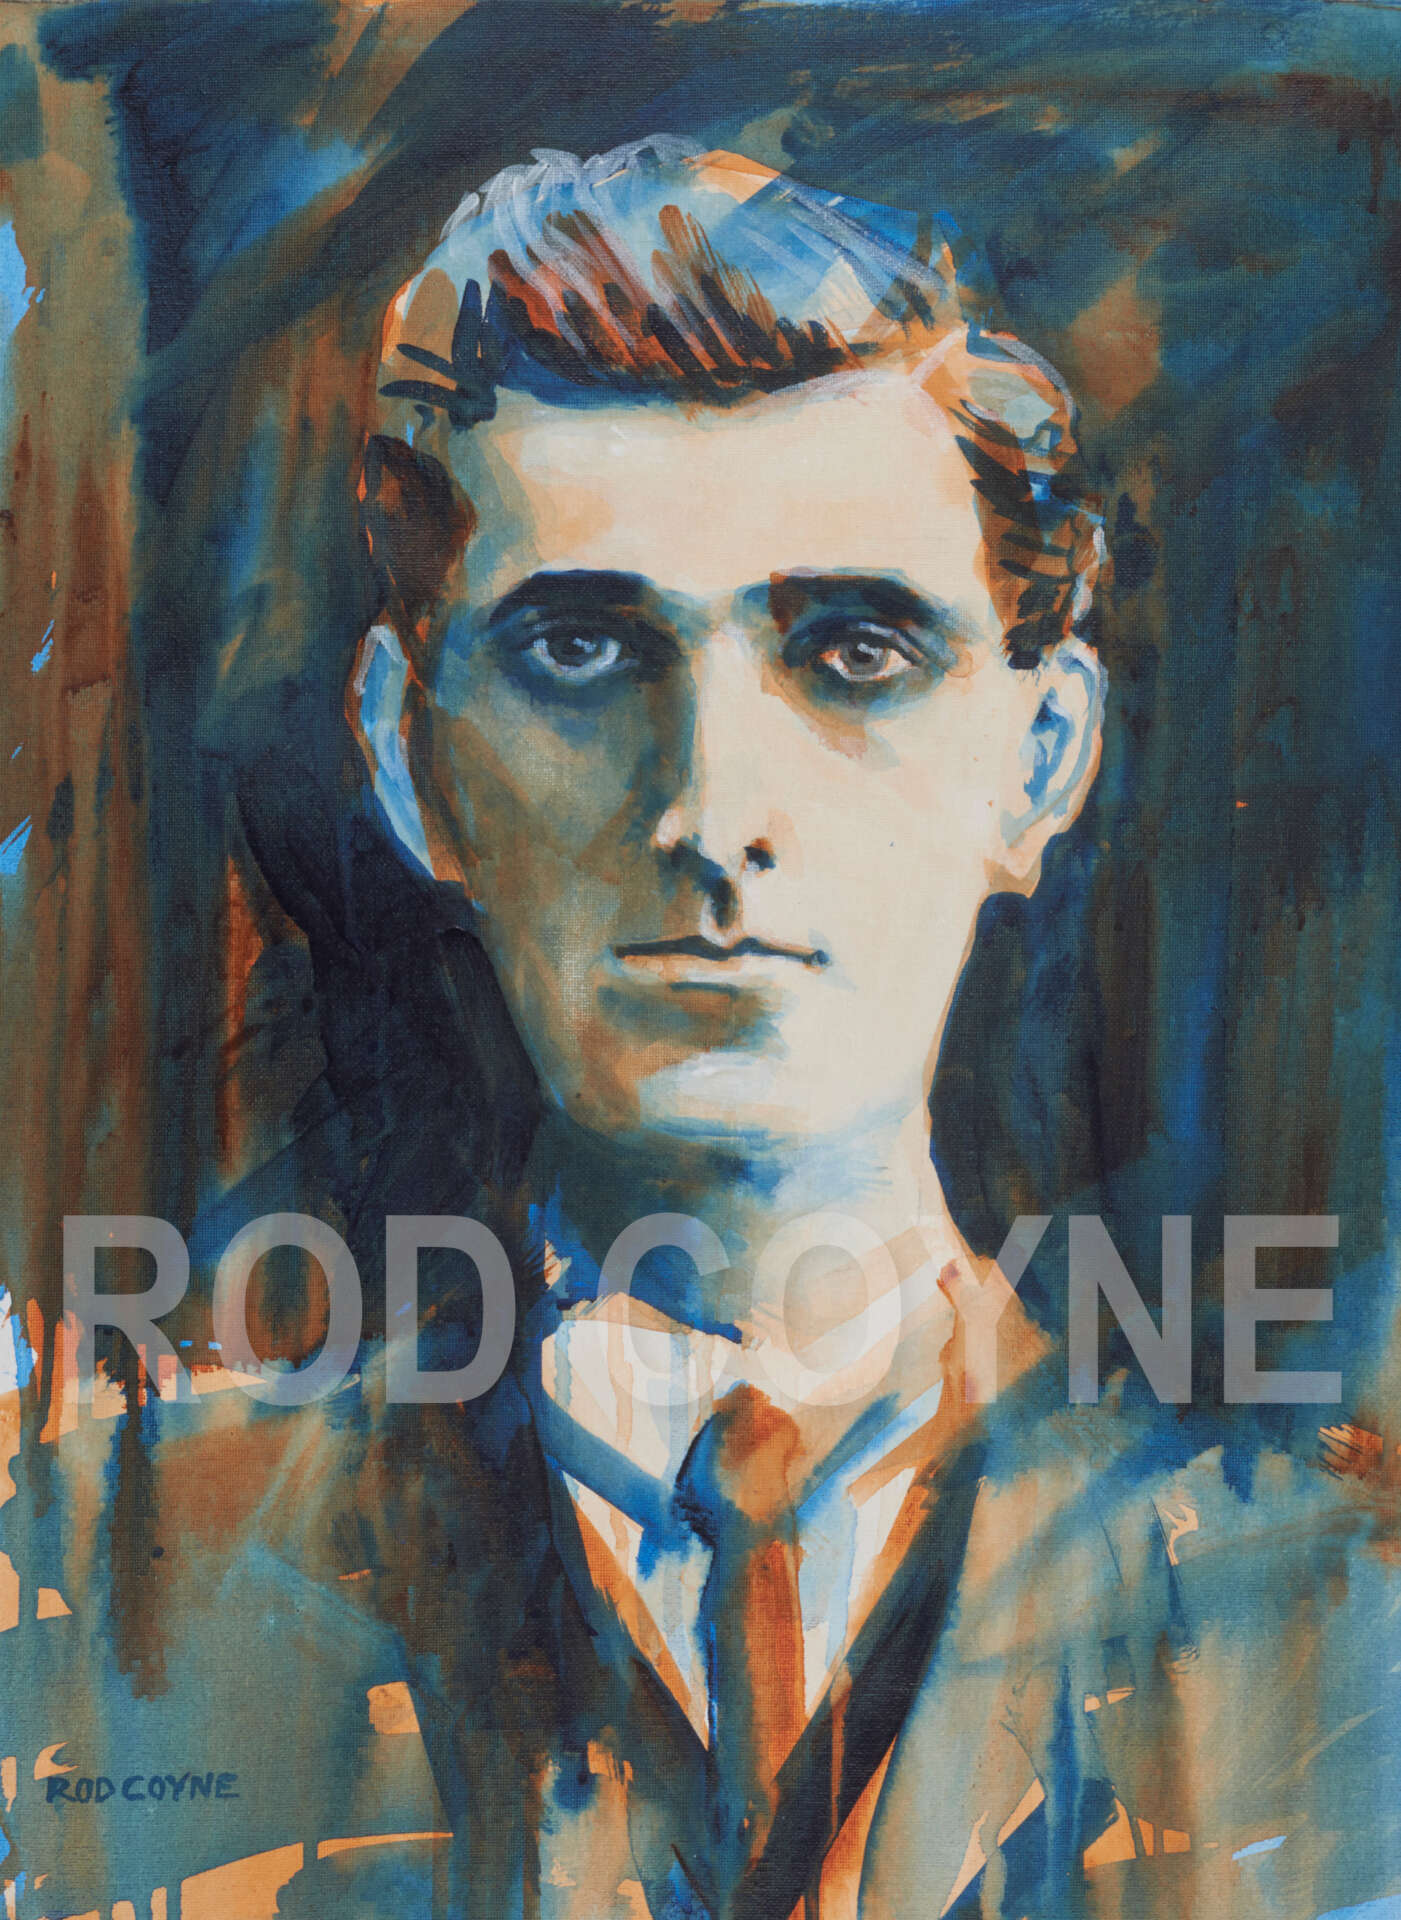 artist rod coyne's portrait "Seán Mac Diarmada 1916" is shown here, watermarked.